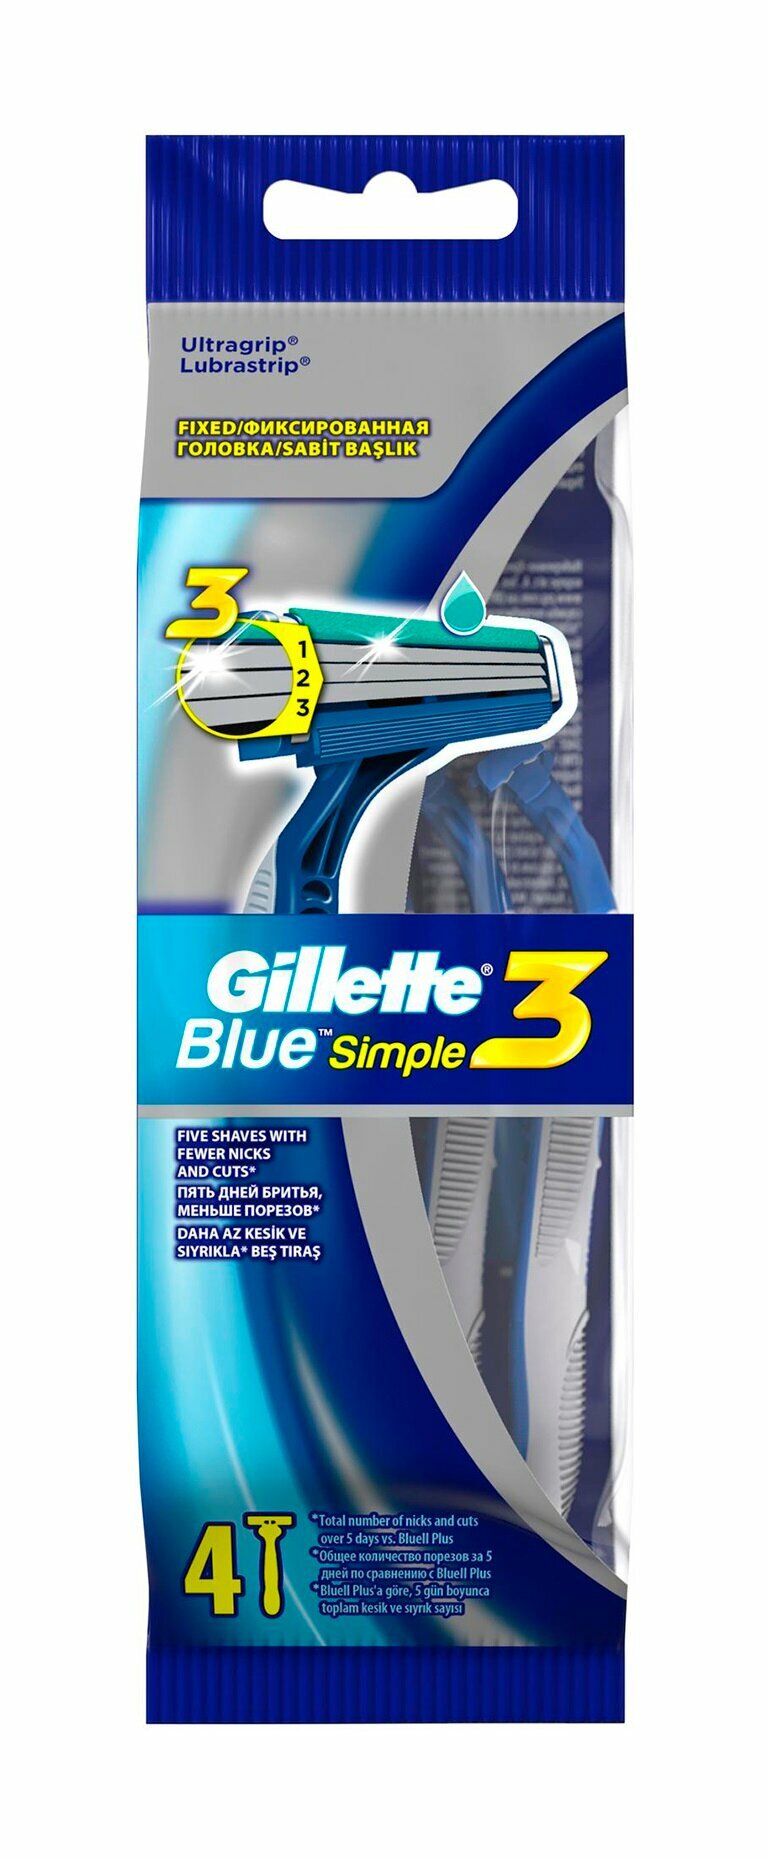 GILLETTE Бритвы одноразовые Gillette Blue3 Simple с 3 лезвиями 4 фиксированная головка муж.